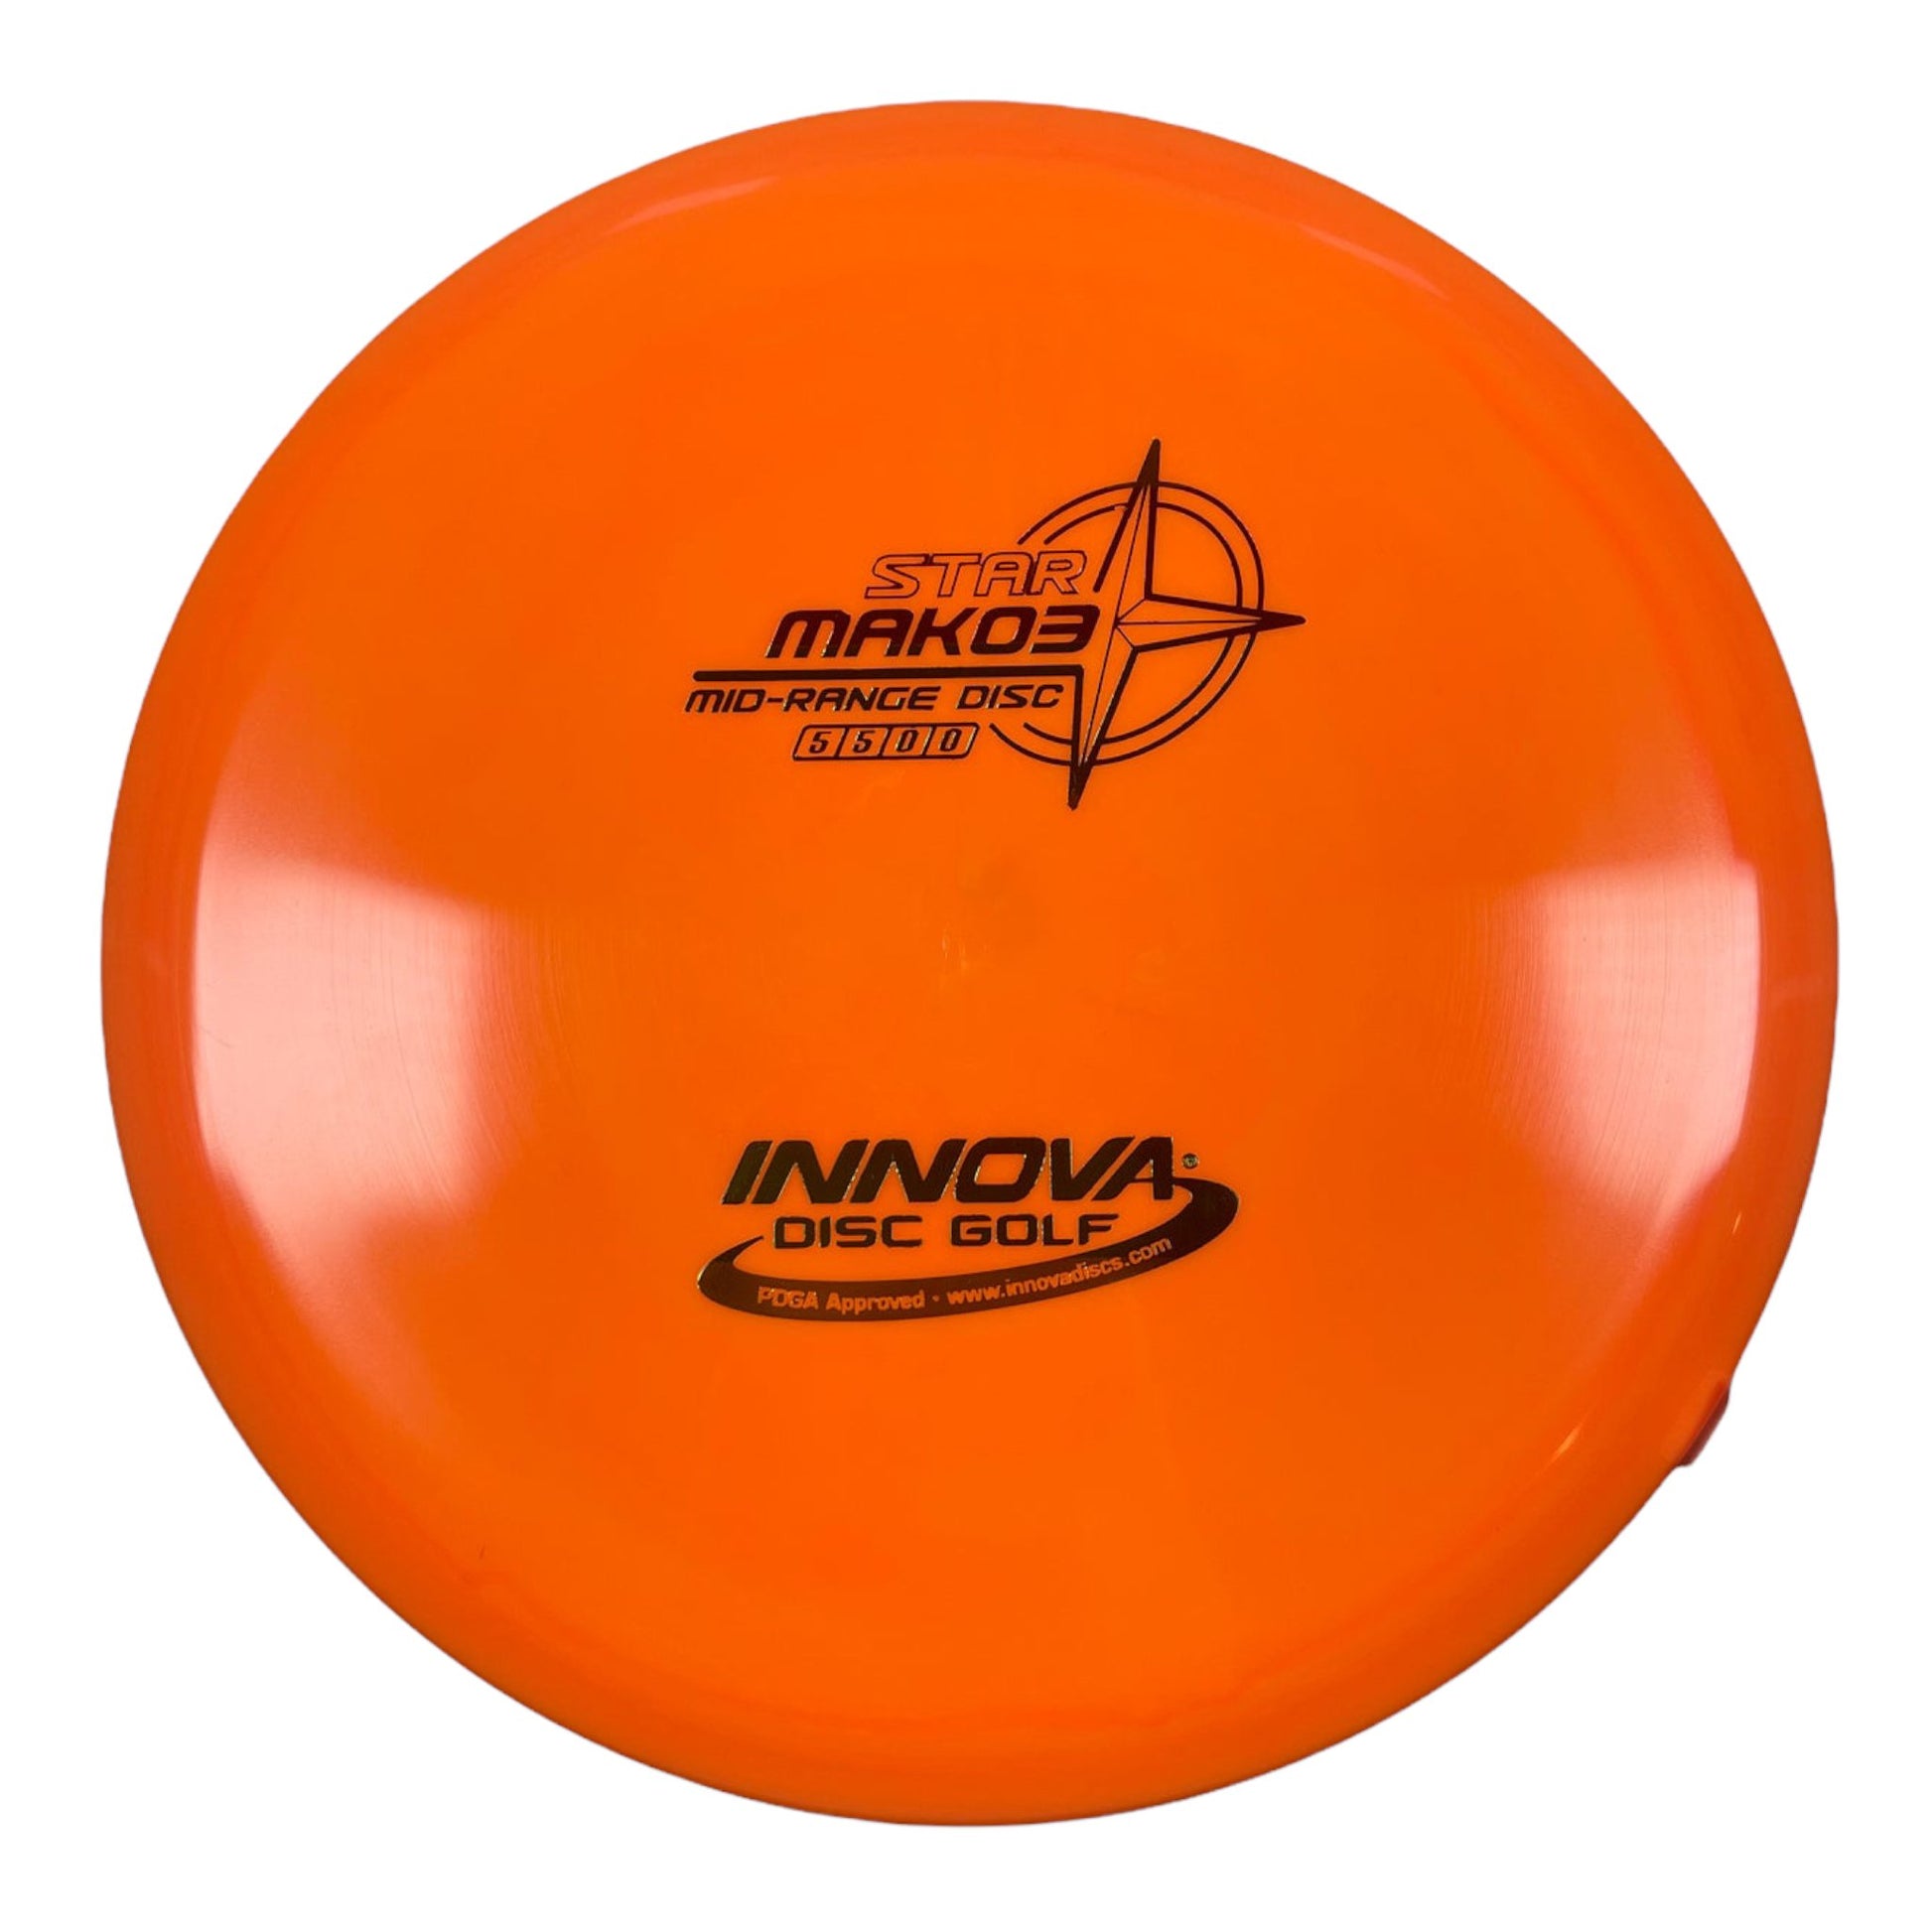 Innova Champion Discs Mako3 | Star | Orange/Rasta 176g Disc Golf